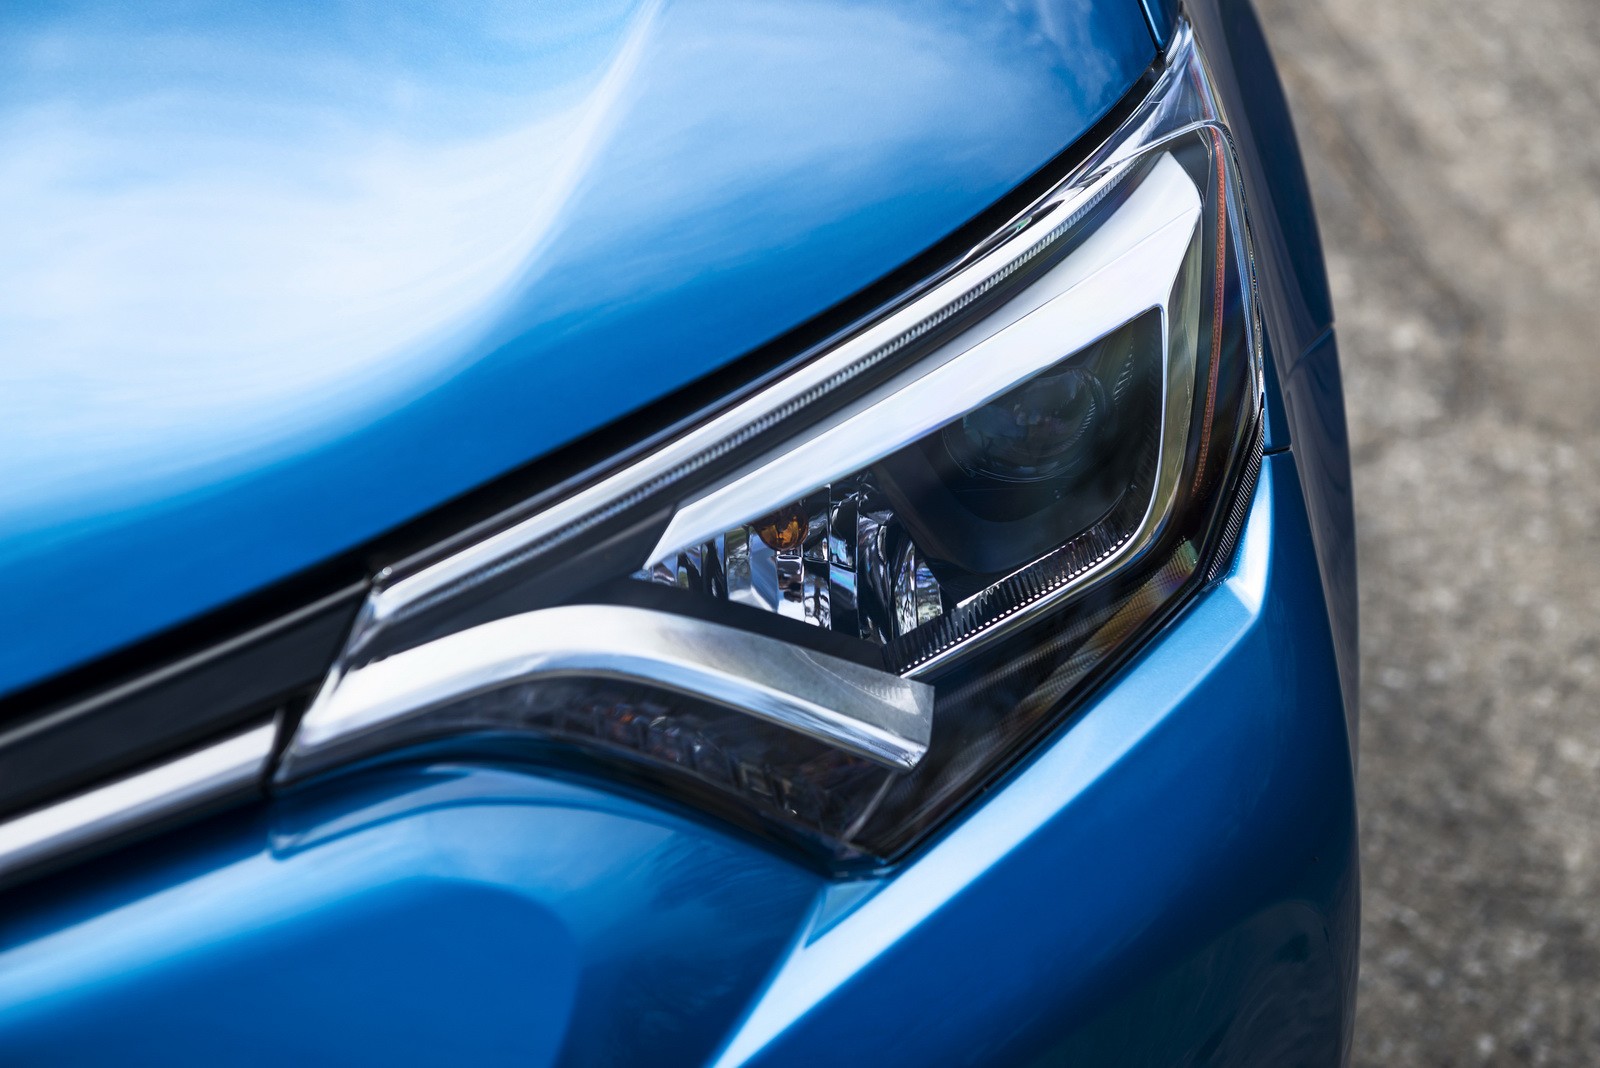 2016 Toyota RAV4 Hybrid Unveiled with More Power, Higher MPG